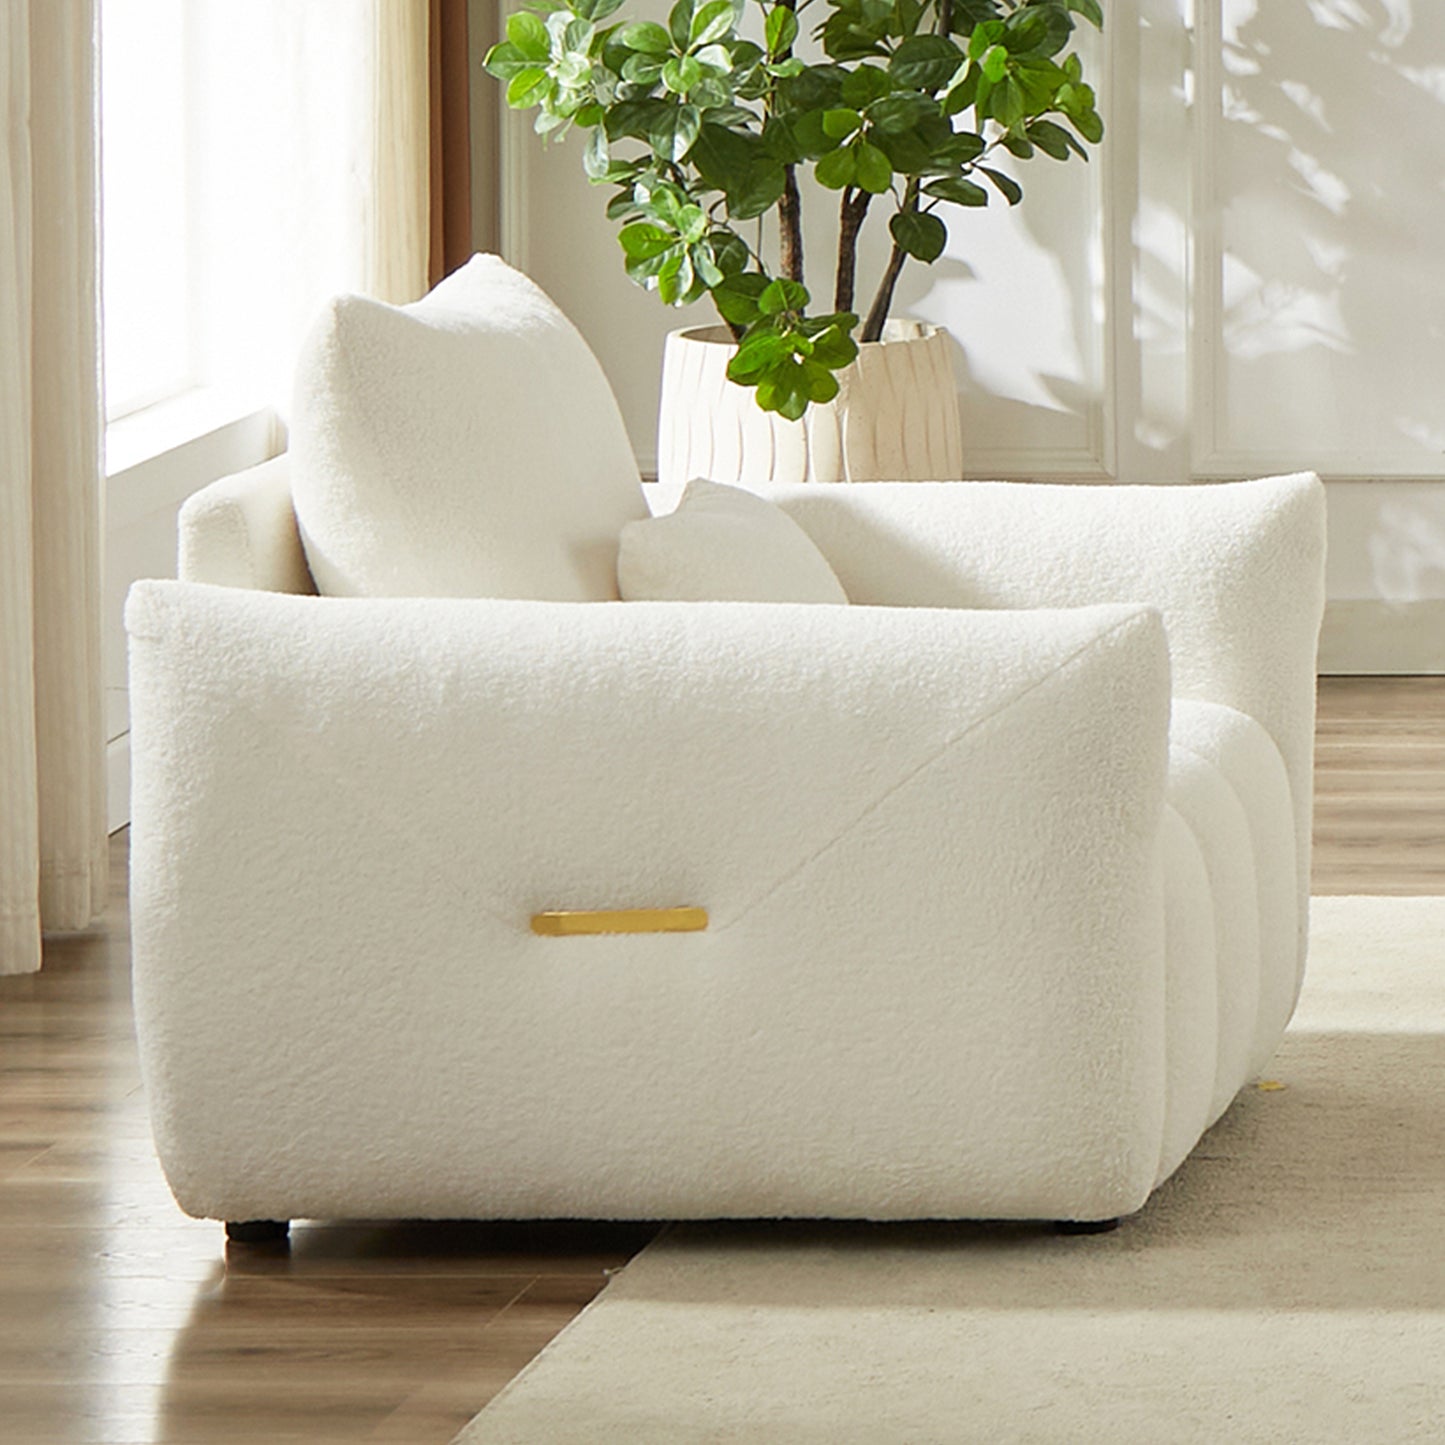 MH39.7''Teddy Fabric Sofa, Modern Lounge Chair